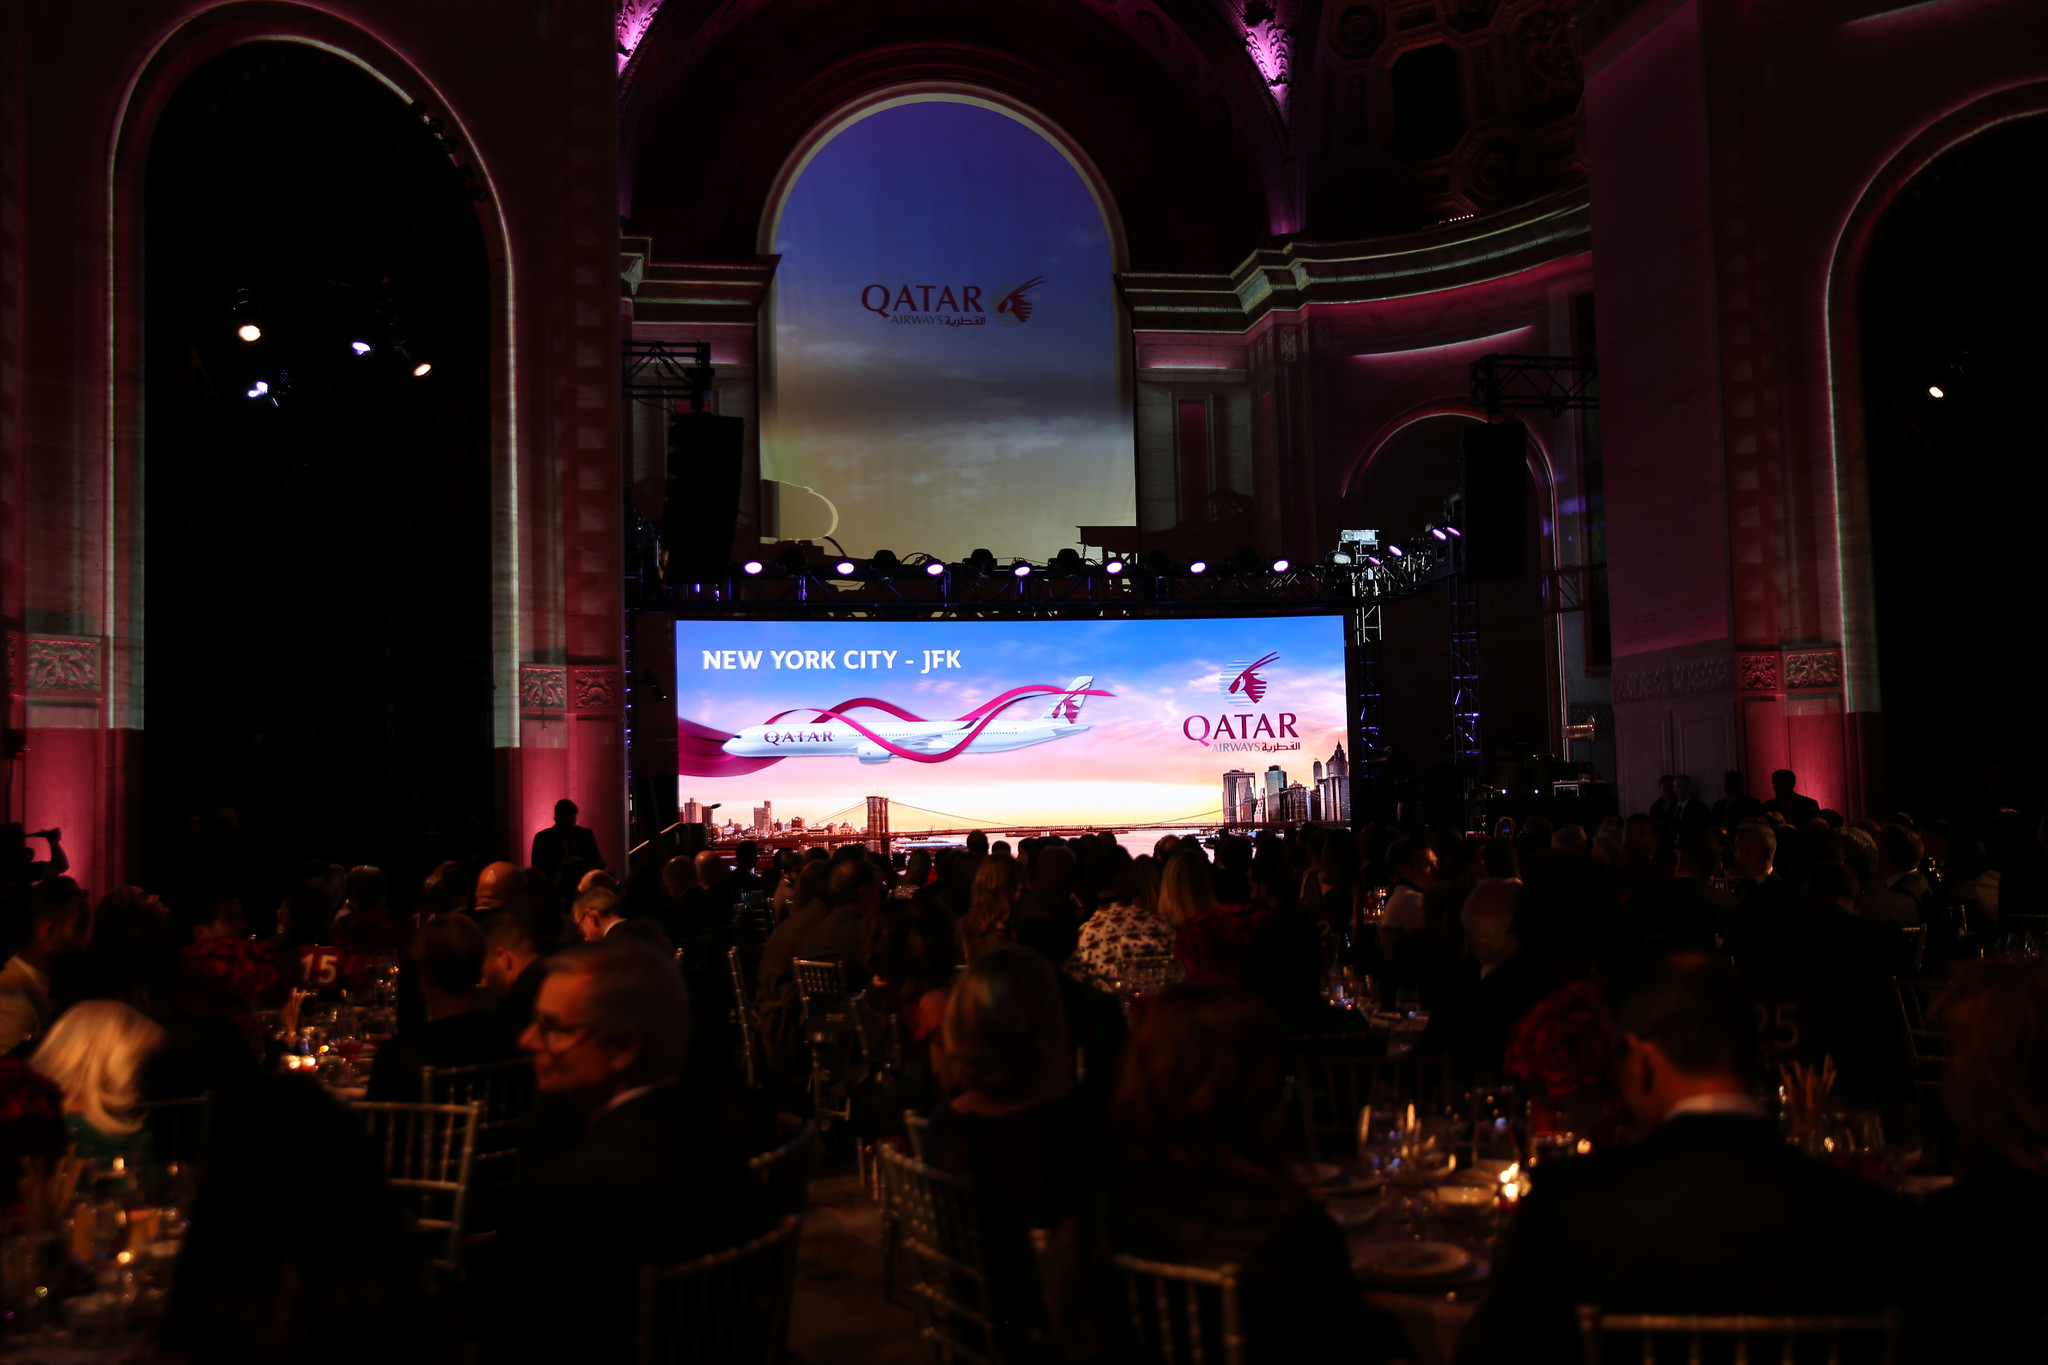 Qatar Airways celebrates over 10 years of service to New York